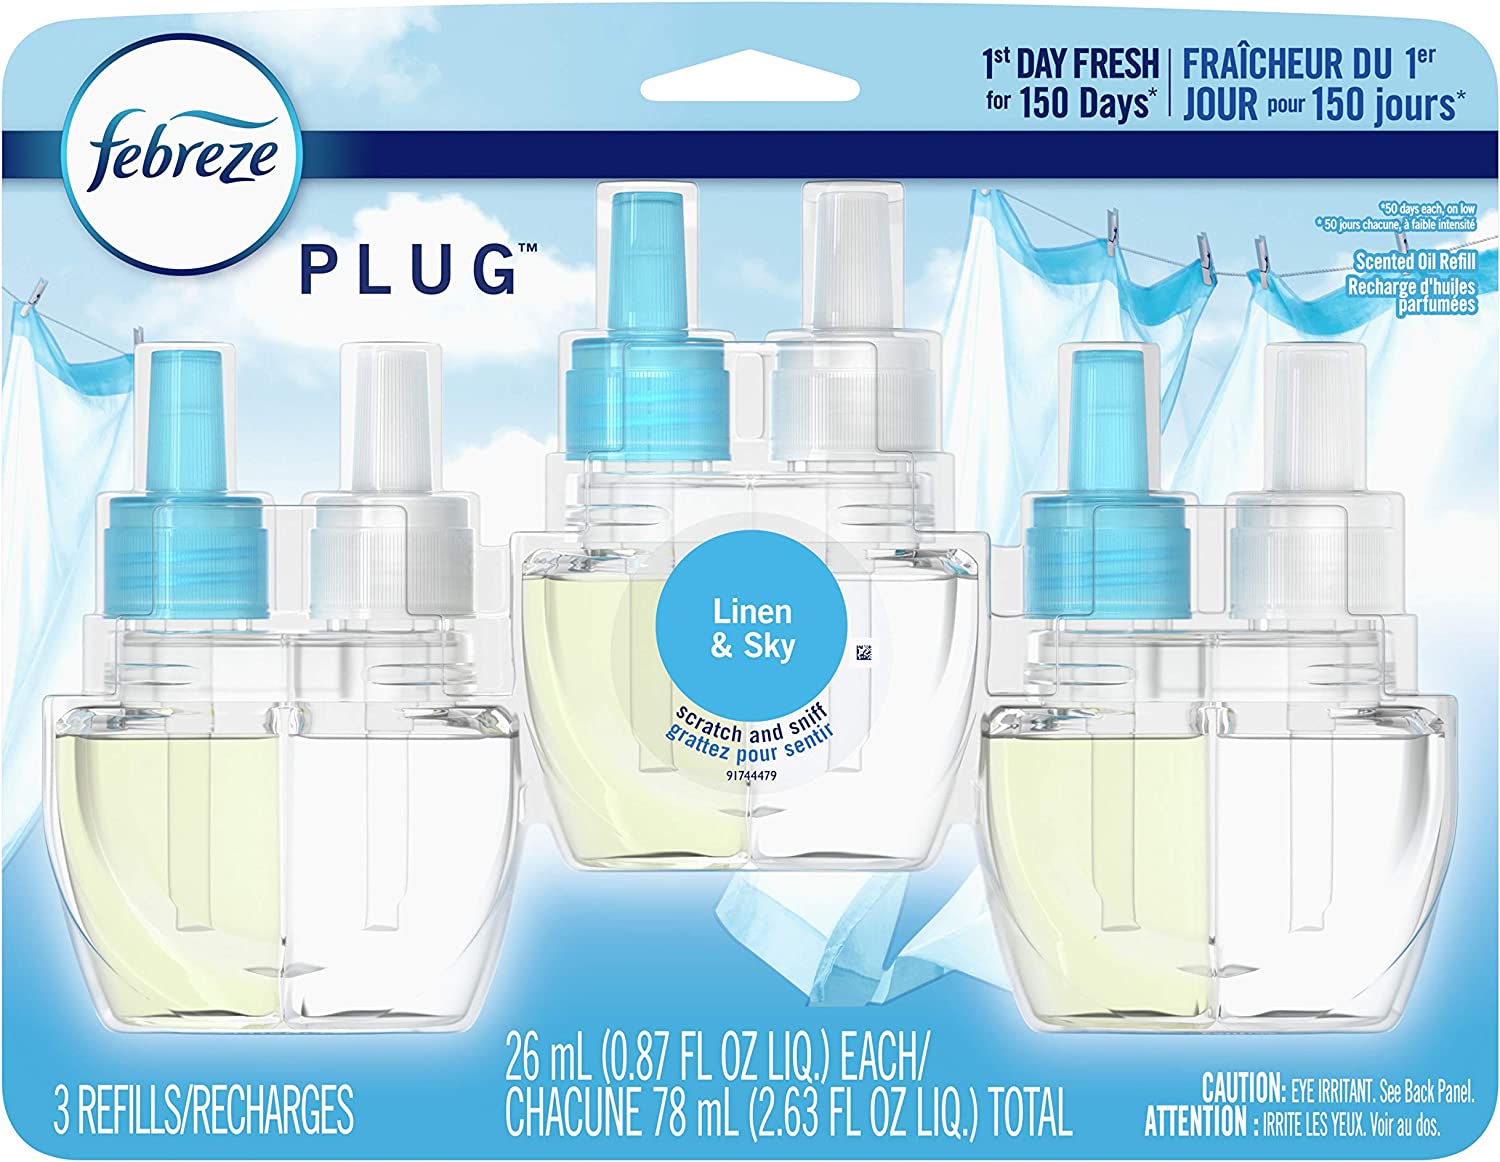 Febreze Odor-Fighting Fade Defy PLUG Air Freshener Refill